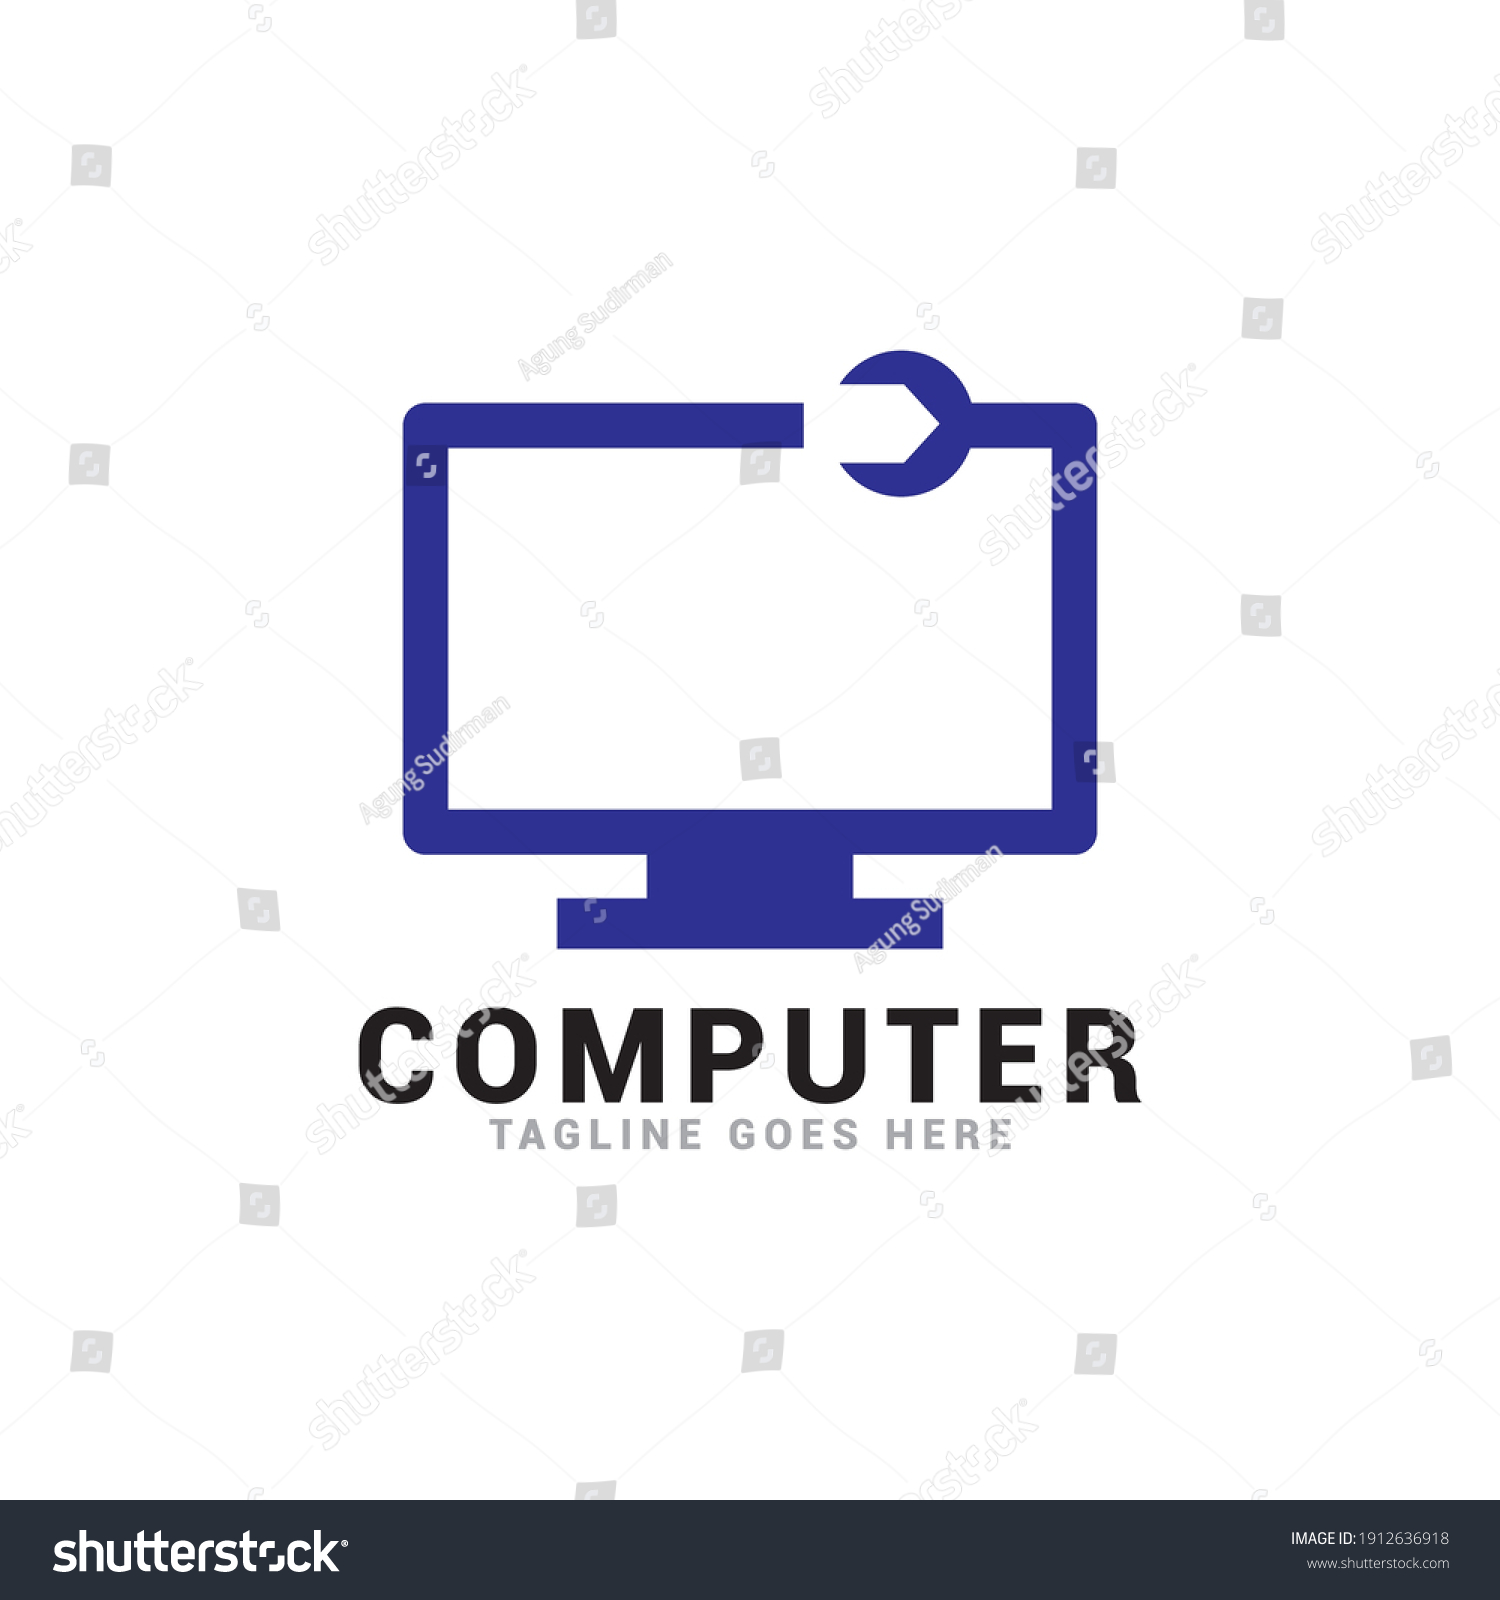 69,010 Computer monitor logo Images, Stock Photos & Vectors | Shutterstock